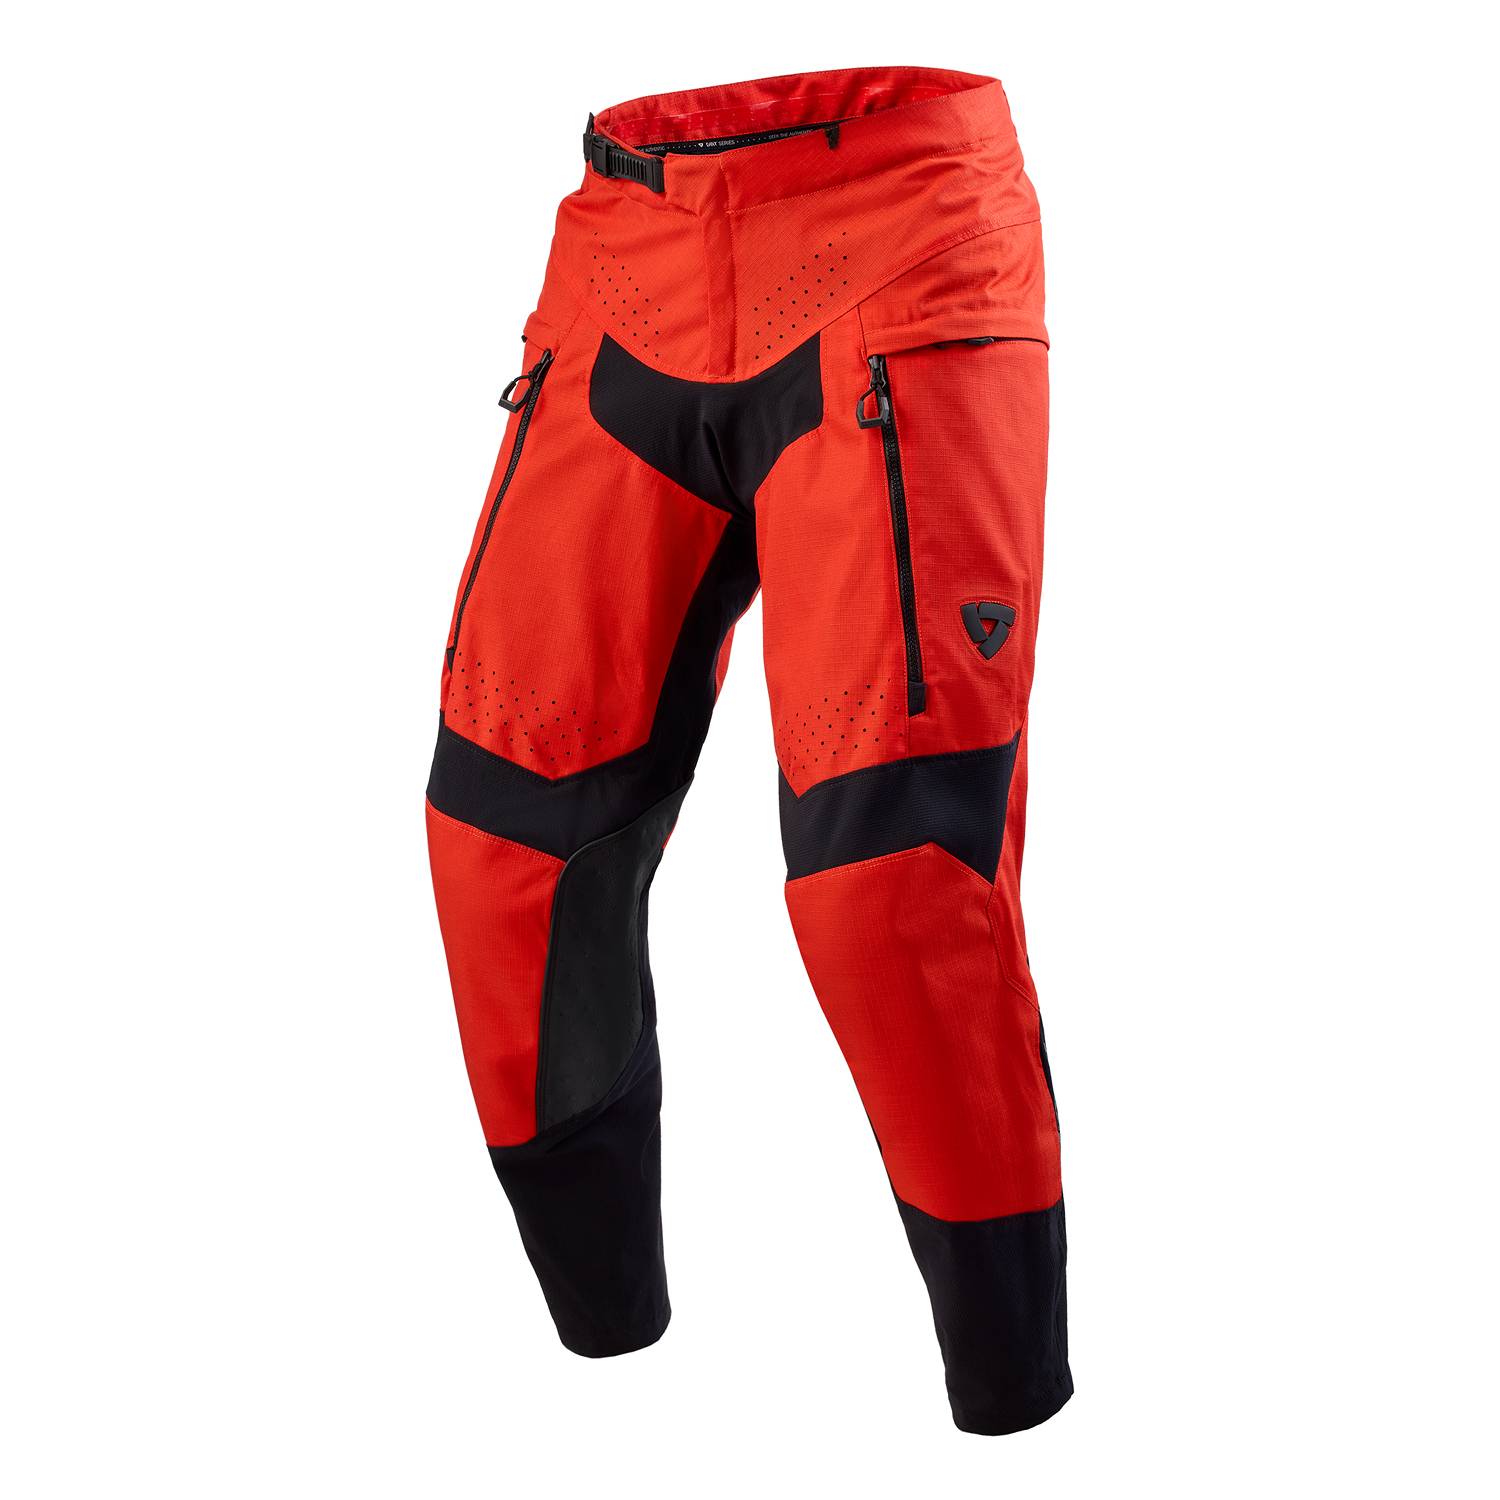 Image of REV'IT! Pants Peninsula Red Short Motorcycle Pants Größe 2XL